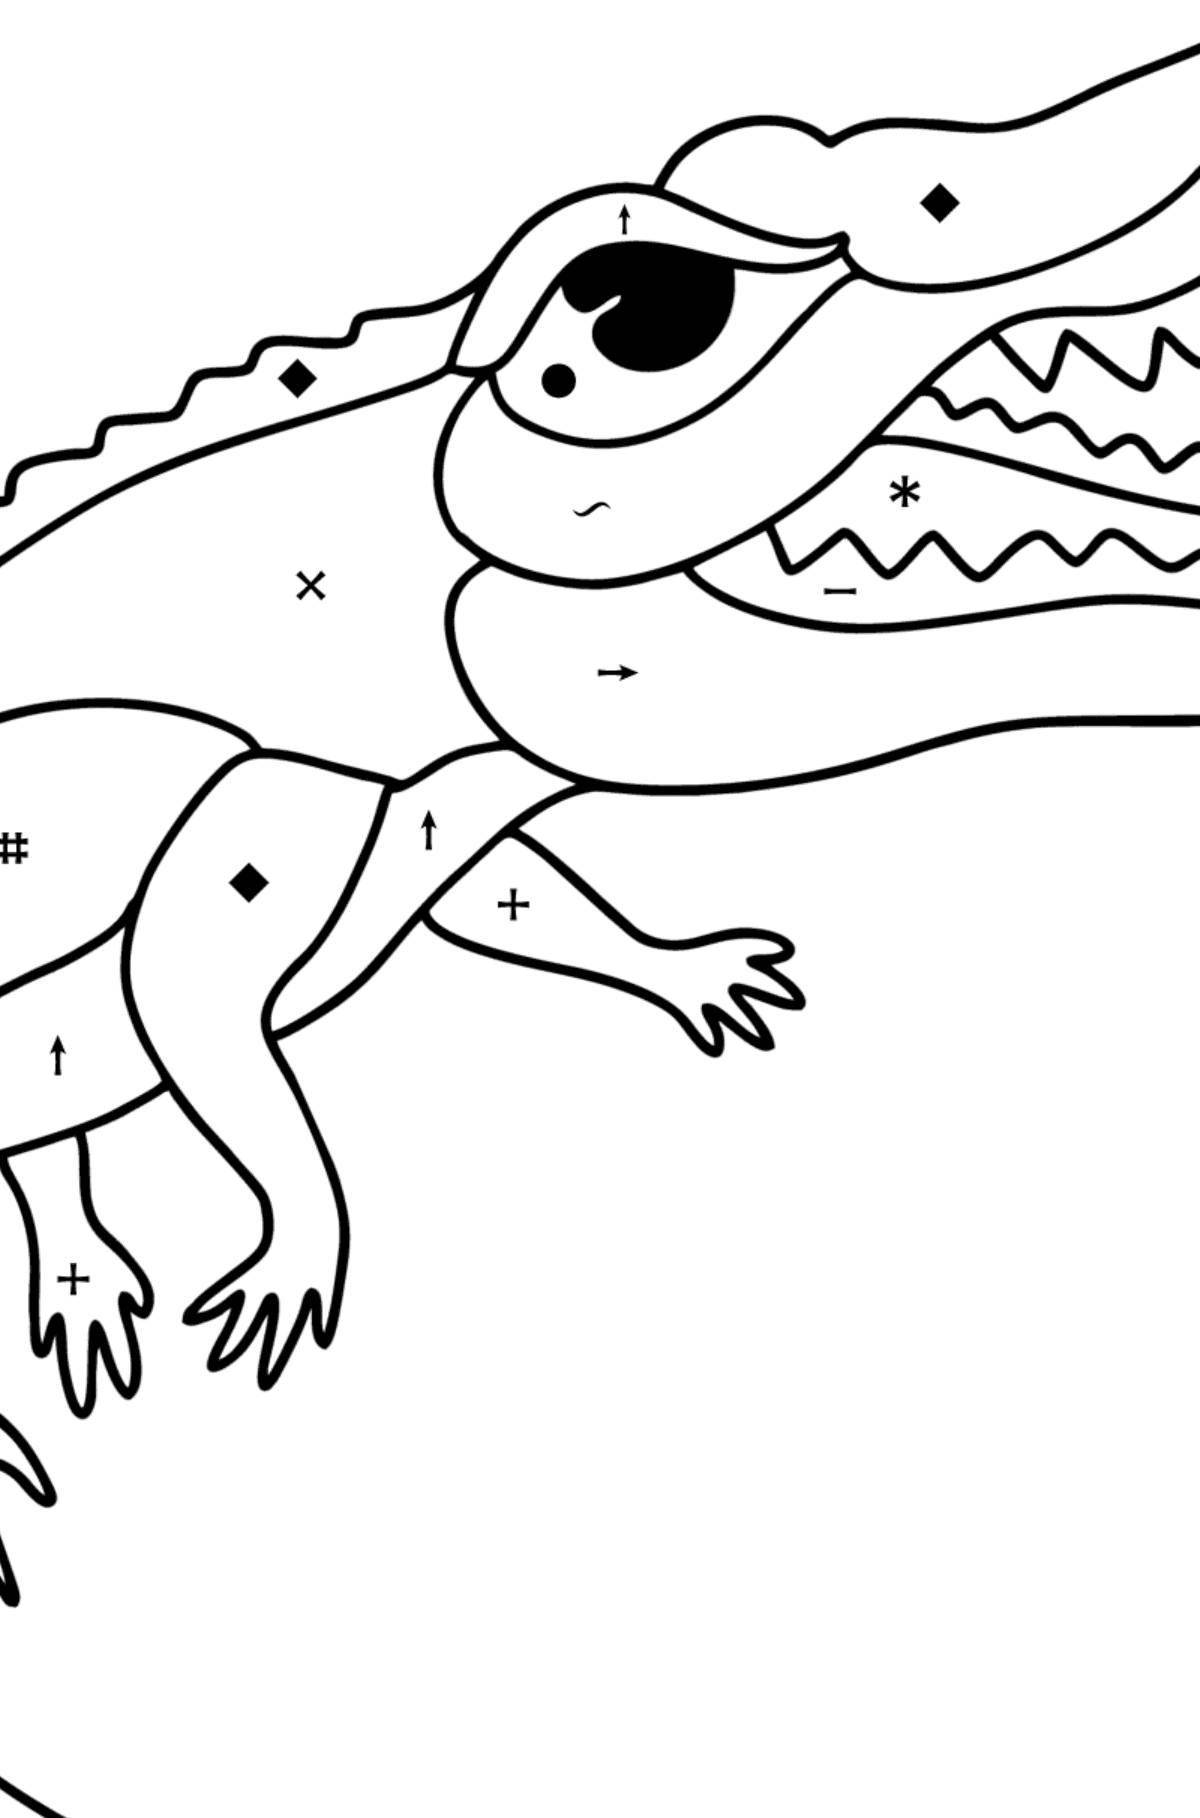 Monty outrageous crocodile coloring page